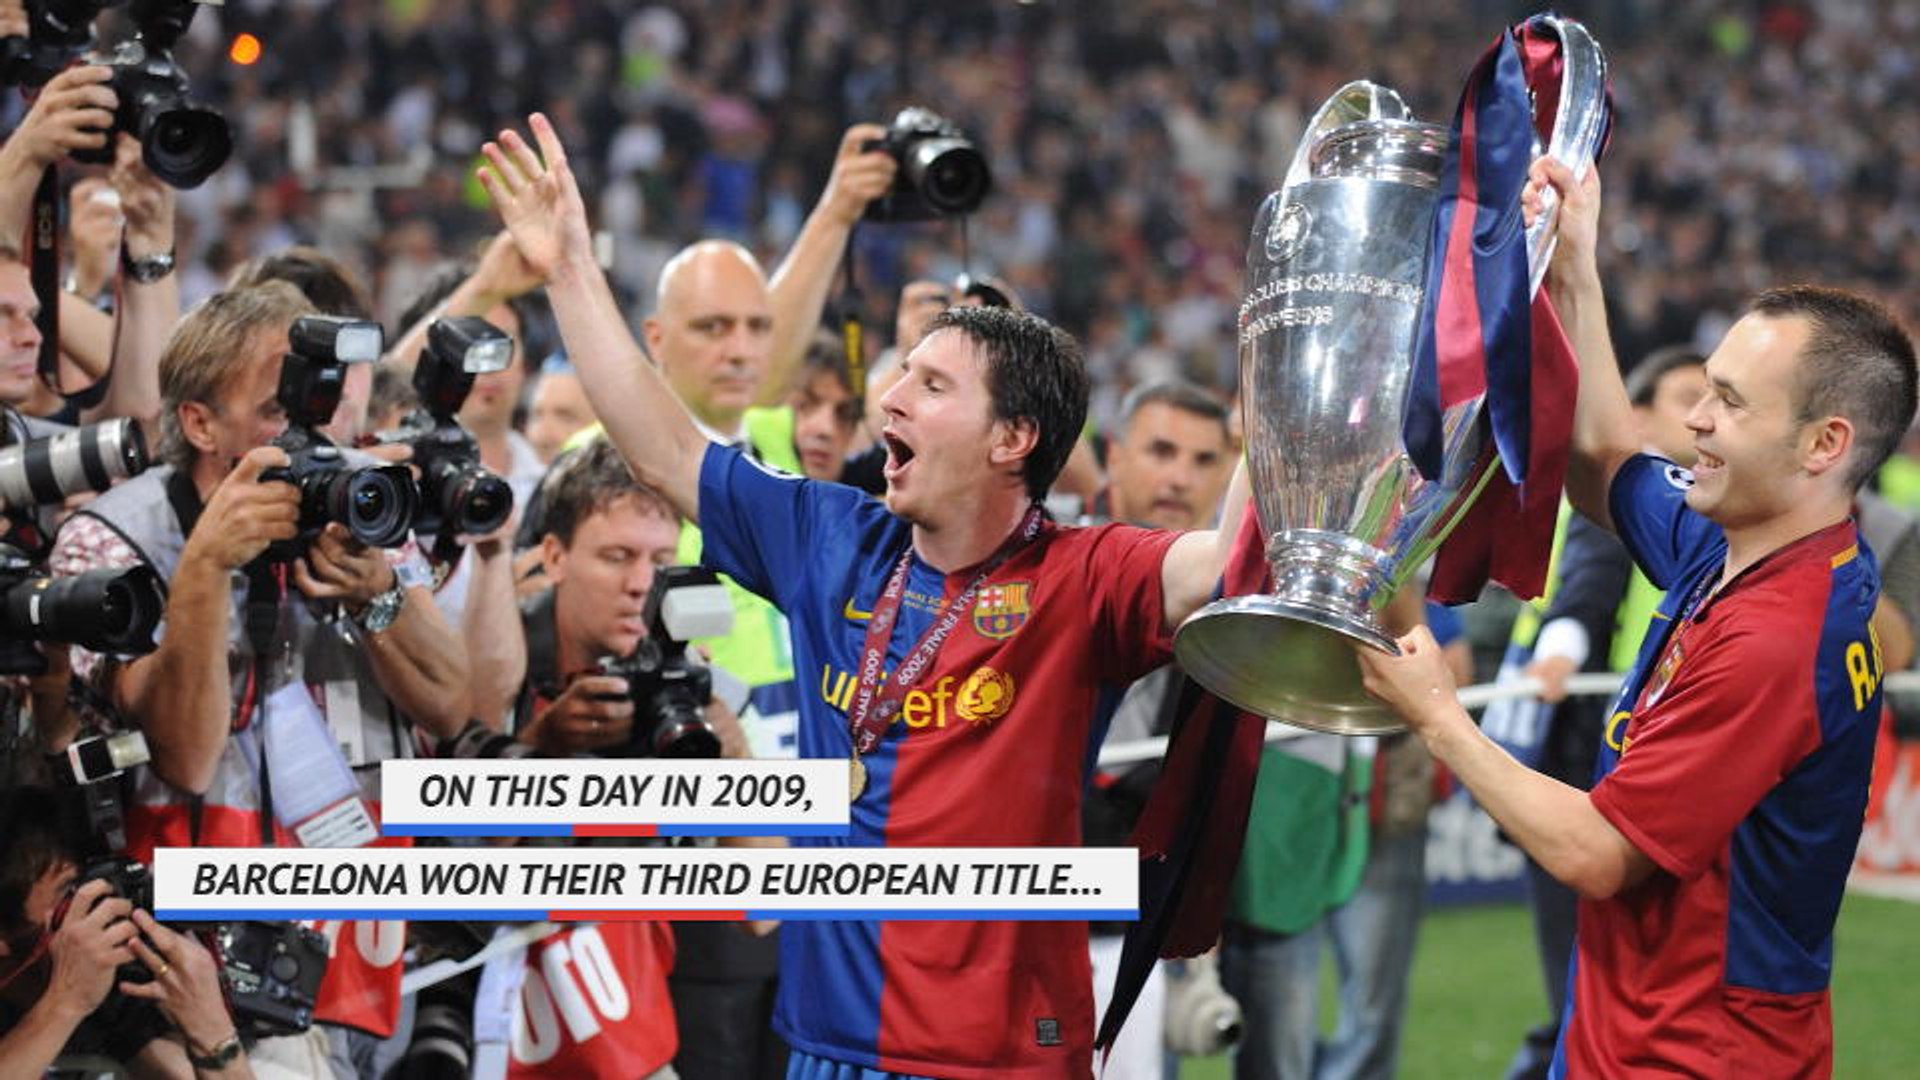 Jet klinge Disciplin Barca win 2009 Champions League final to complete treble - video Dailymotion